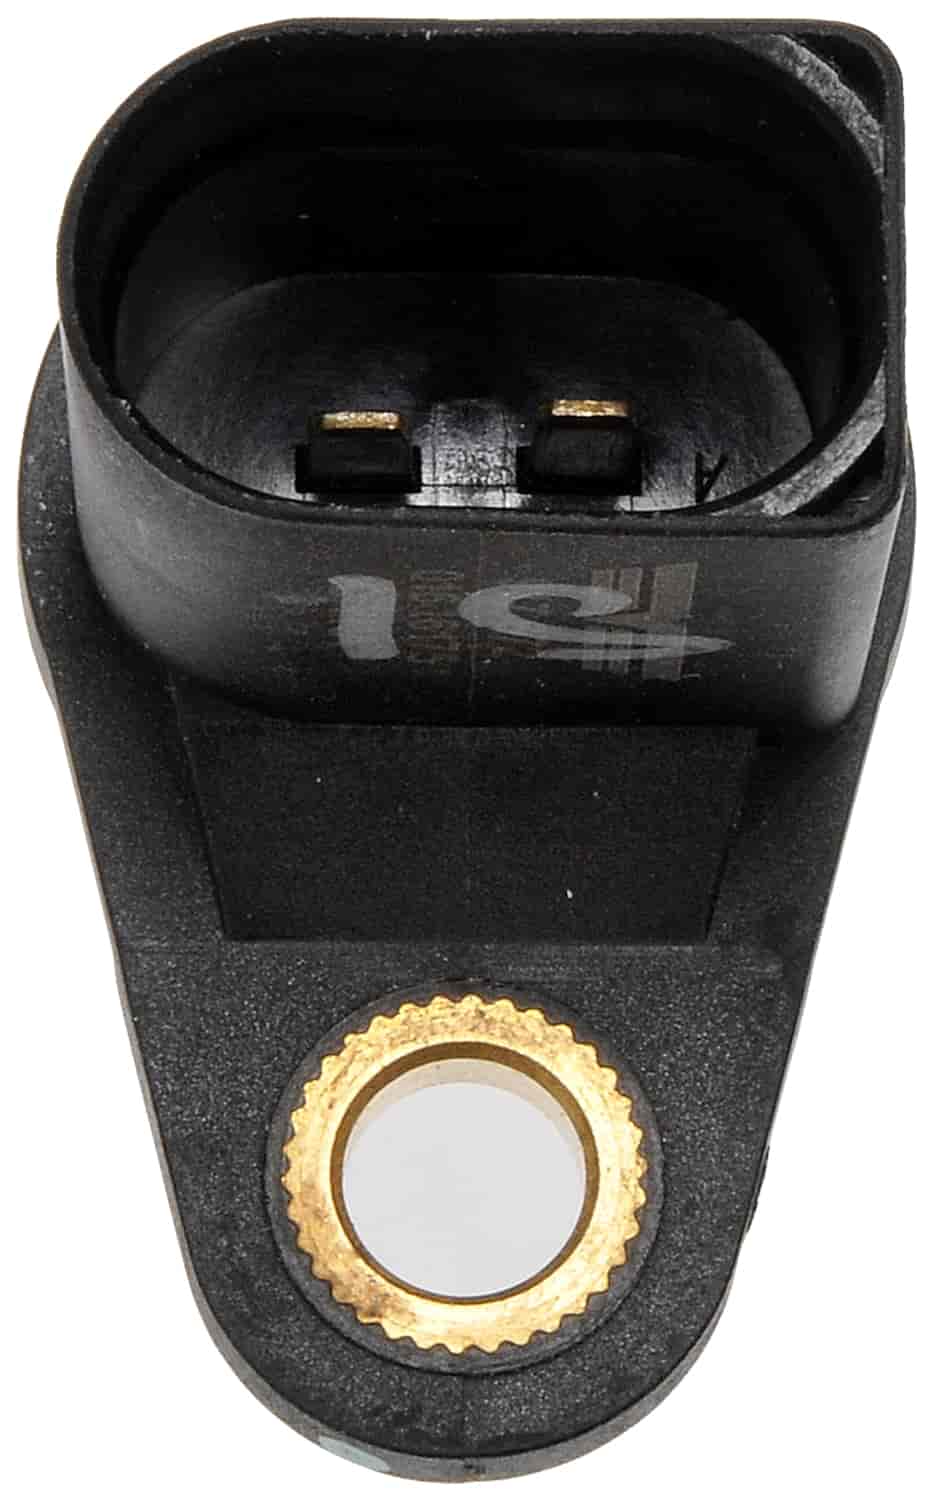 Transmission Input Speed Sensor for 1998-2007 Volkswagen Beetle, Golf, Jetta